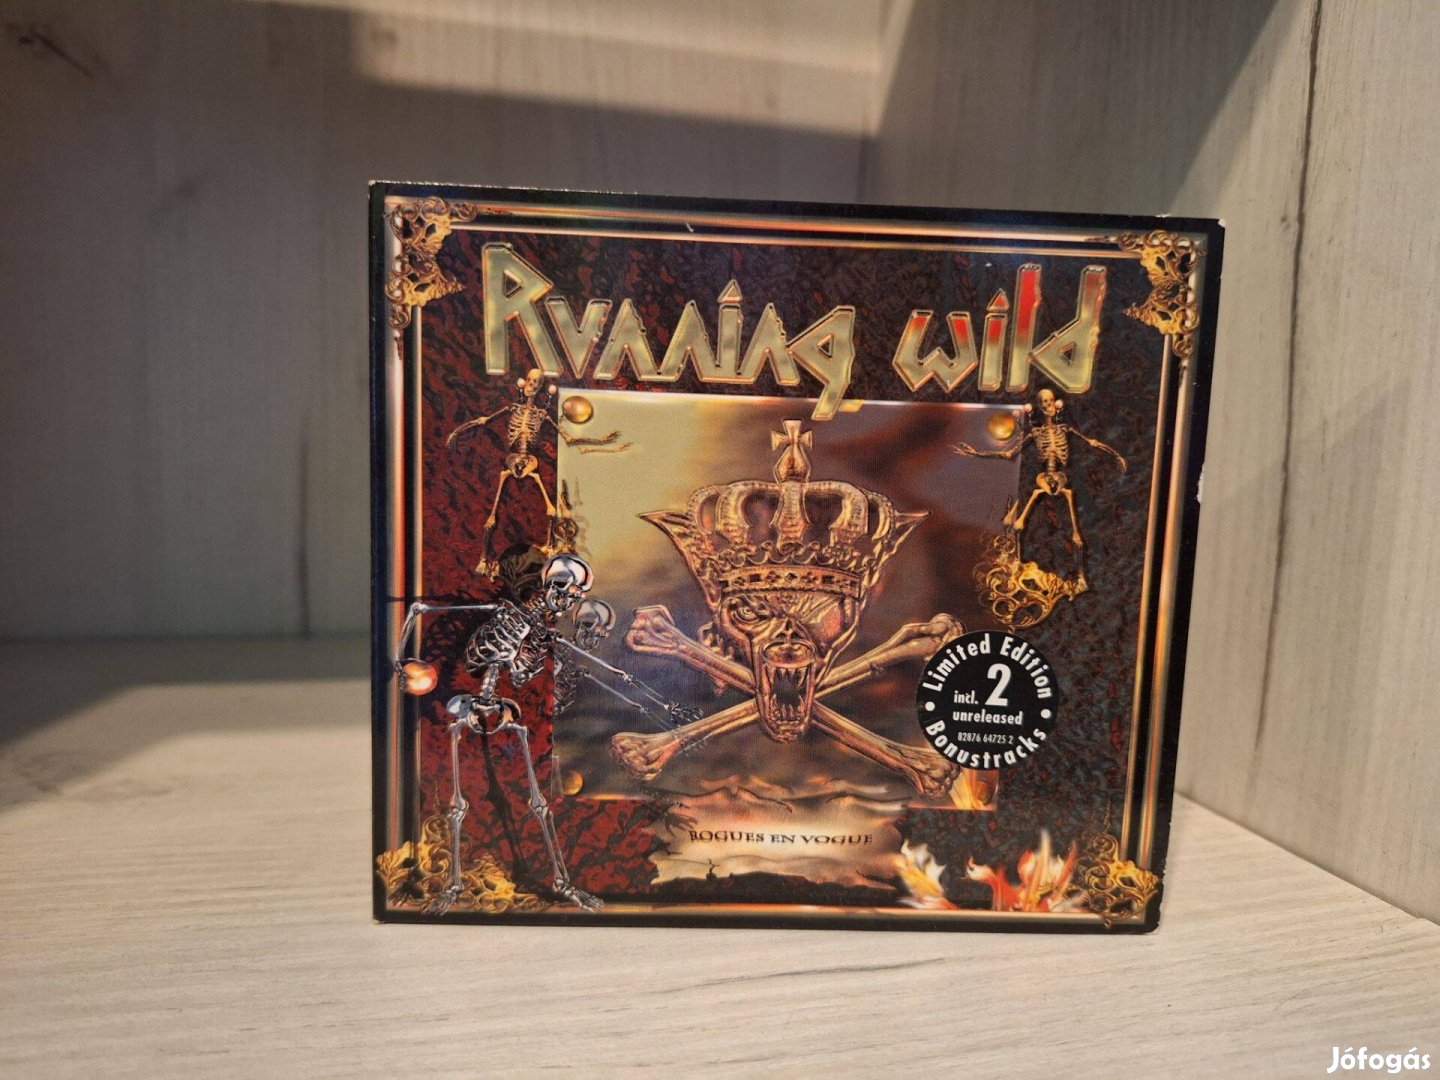 Running Wild - Rogues En Vogue CD Limited Edition, Digipak